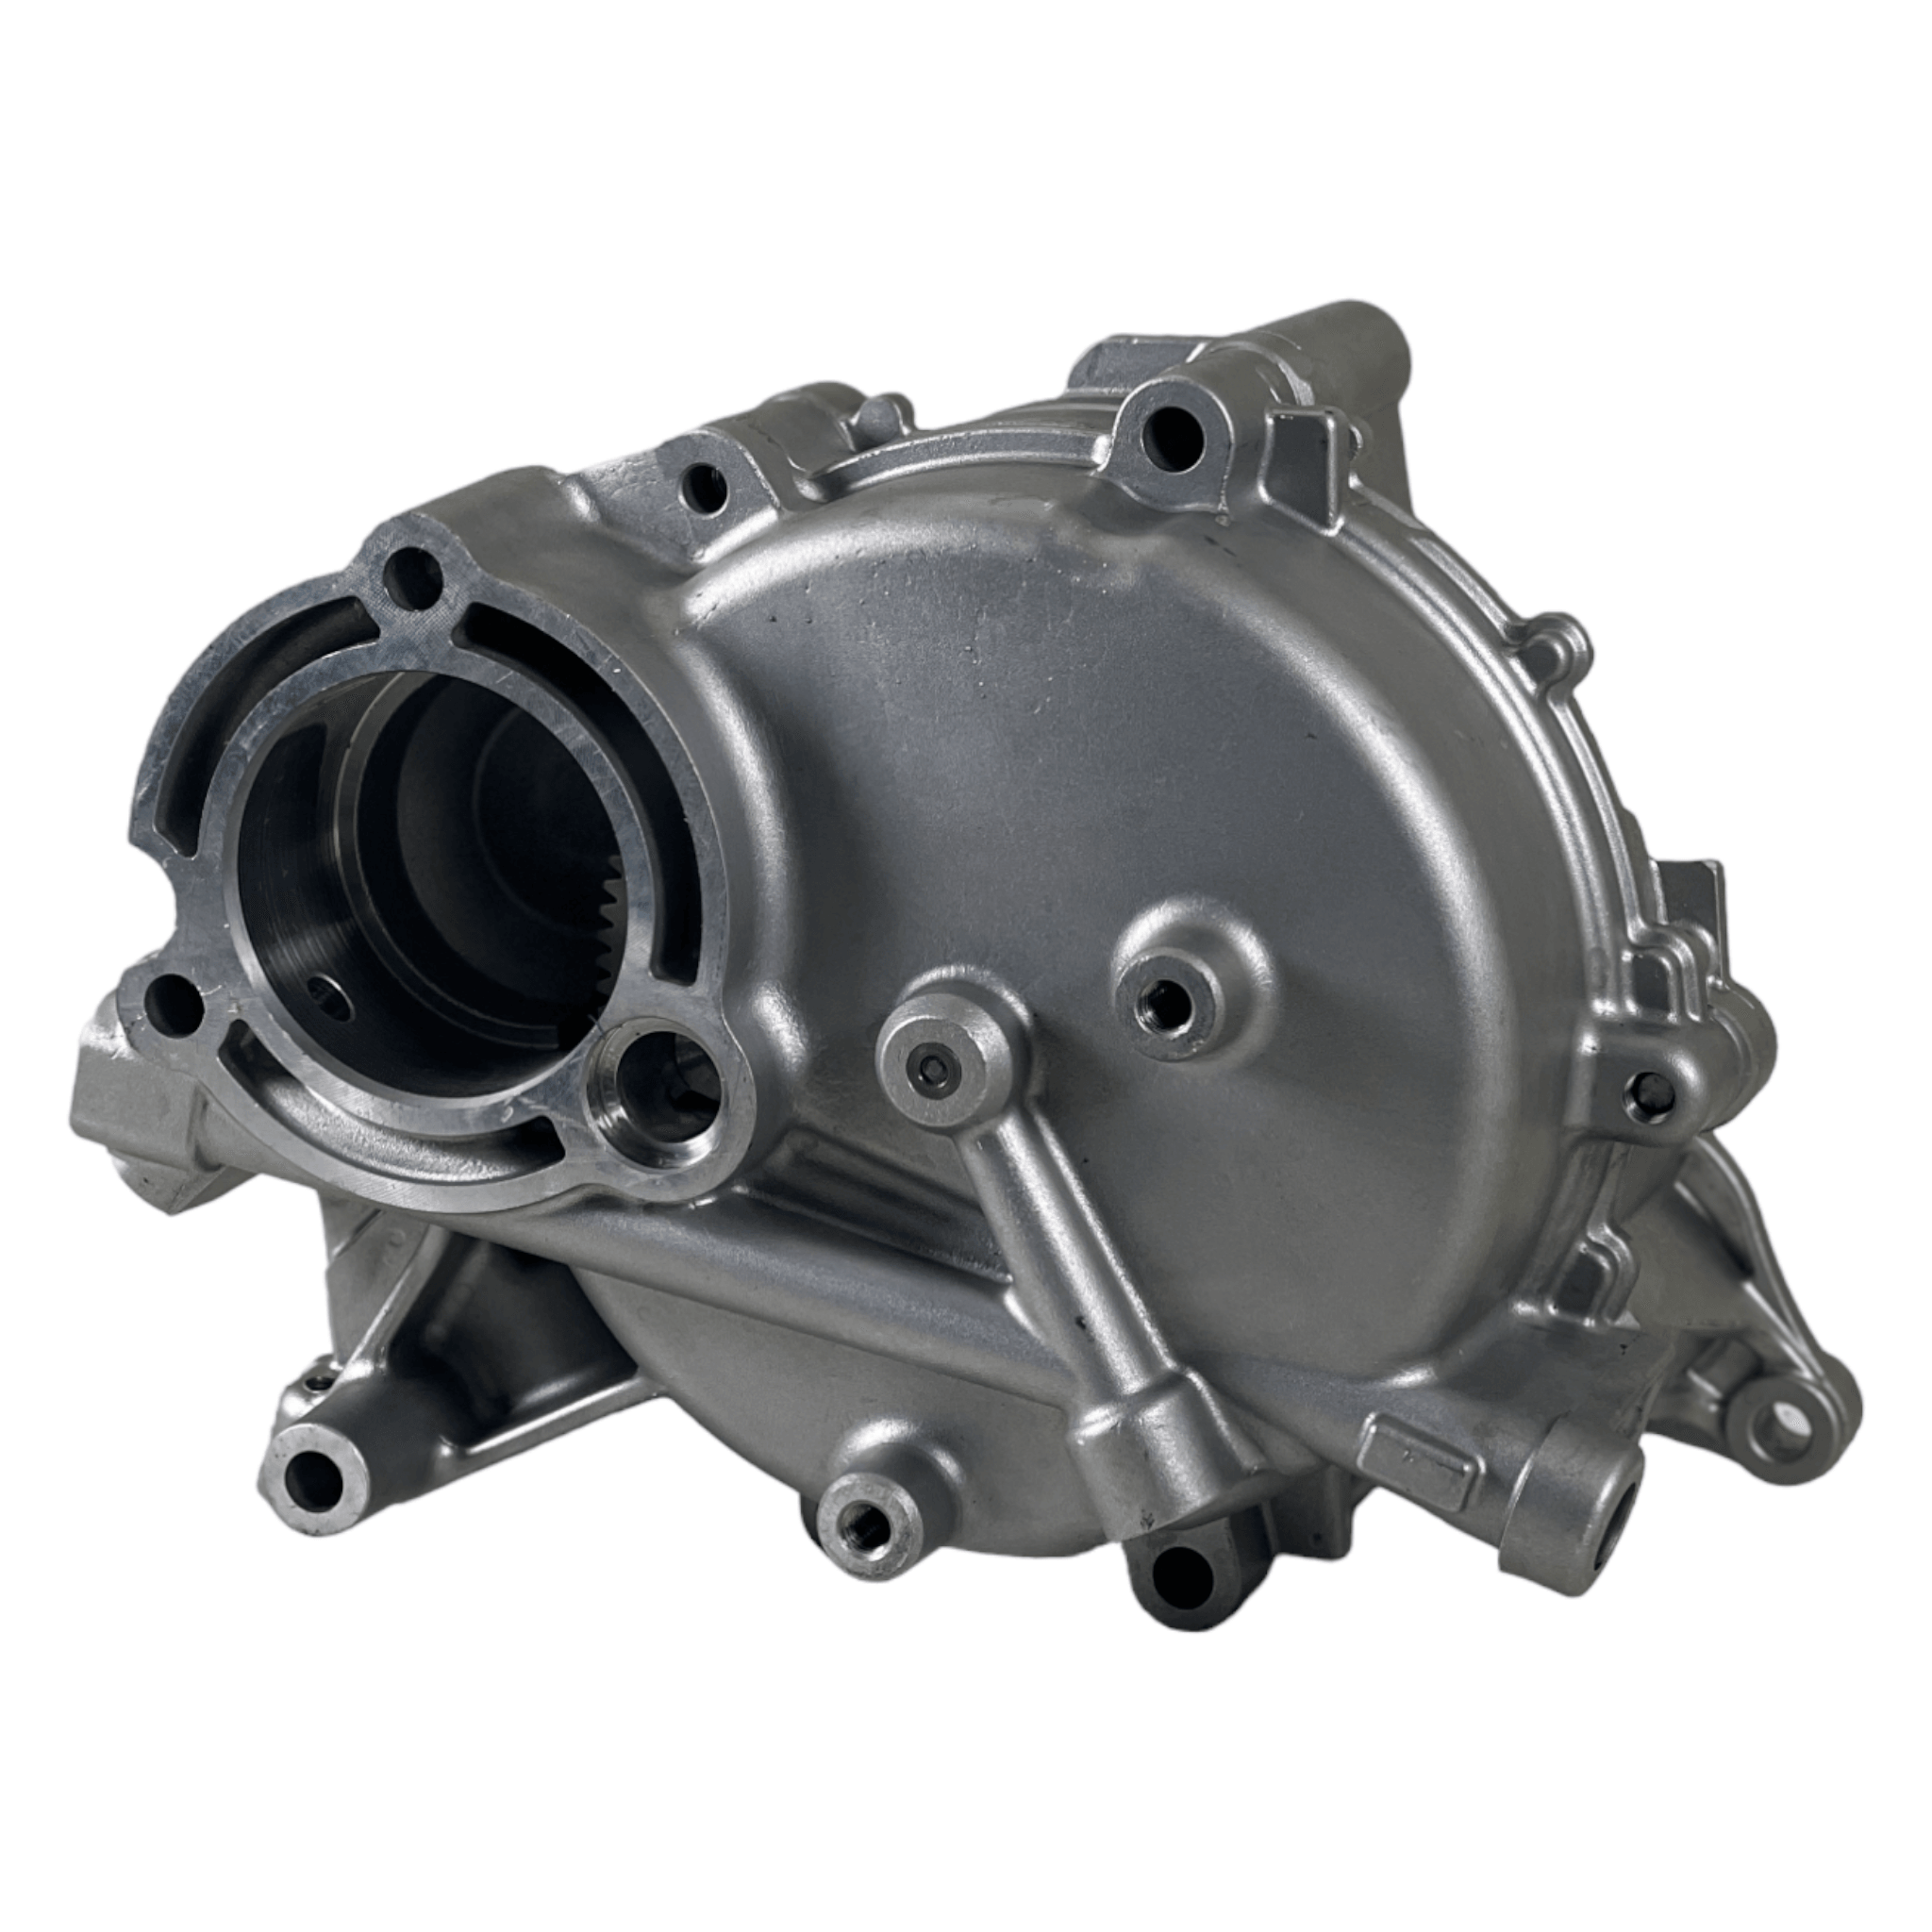 A4730300134 Genuine Detroit Diesel® Turbo Gear Box - ADVANCED TRUCK PARTS